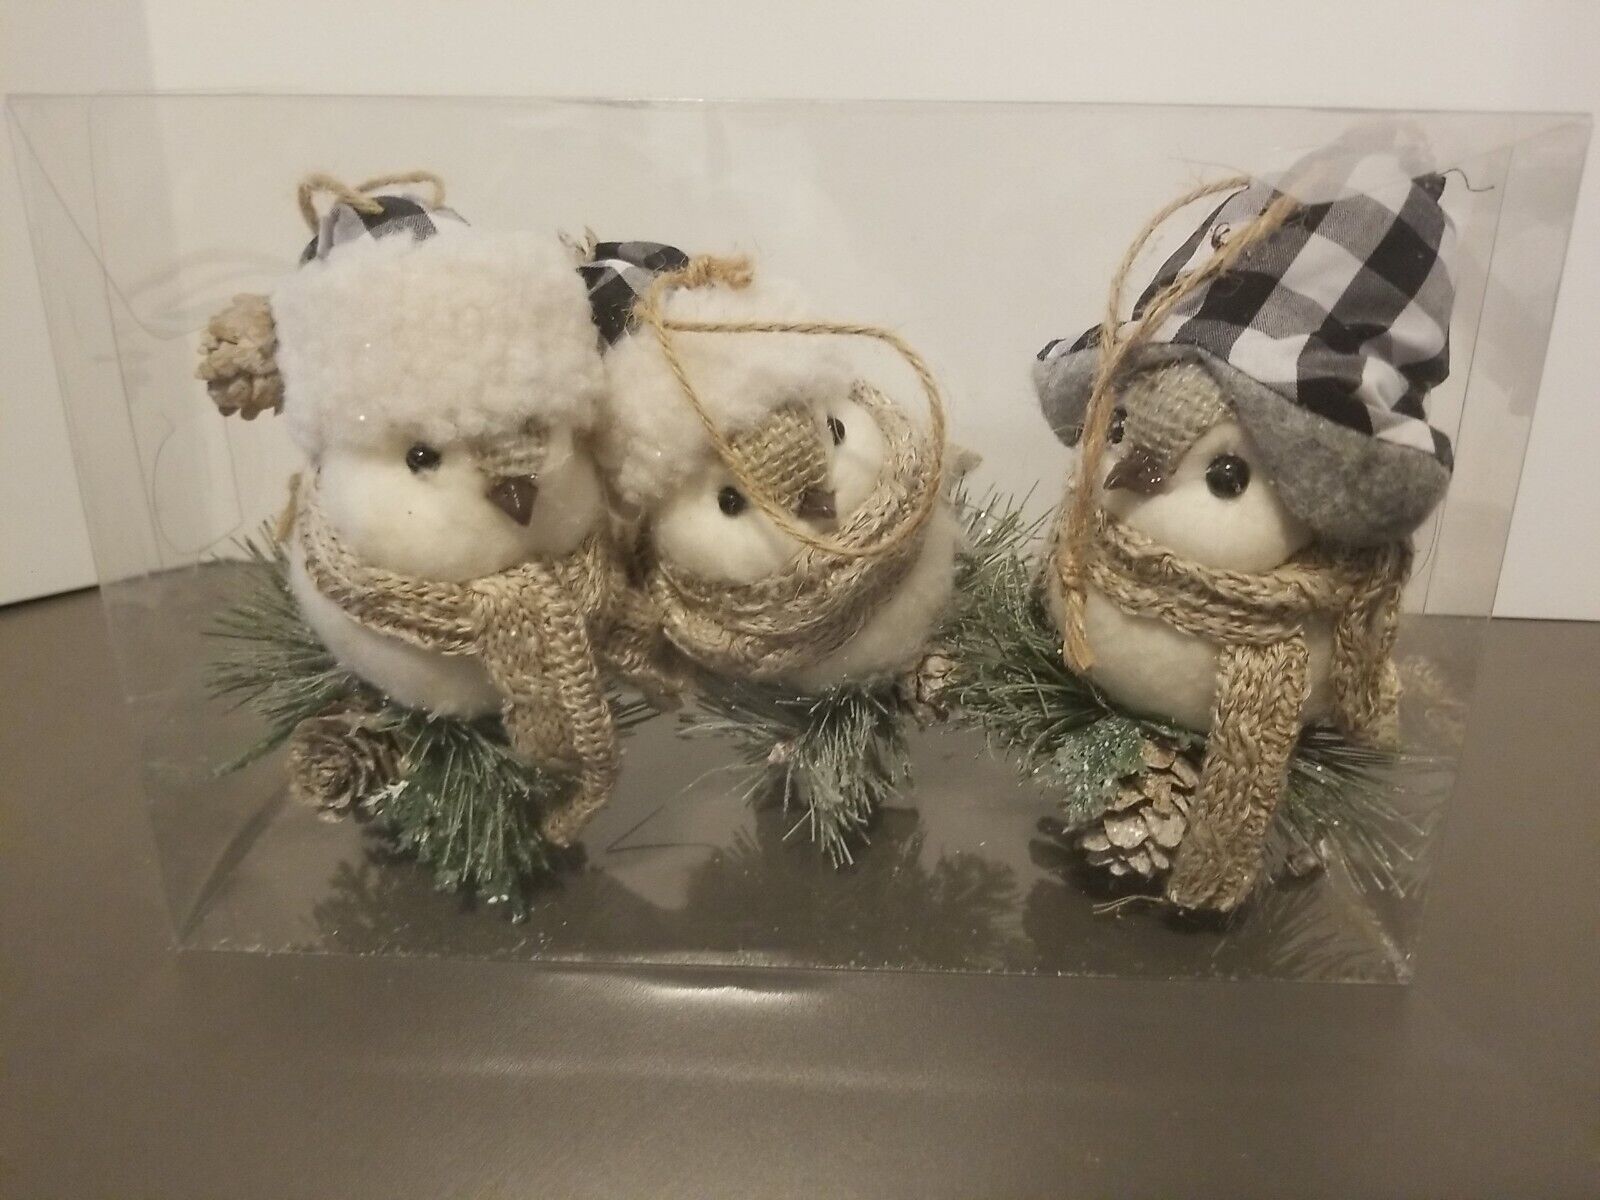 NEW 2022 Winter small bird ornaments set of 3 glitter pinecones black gray hats